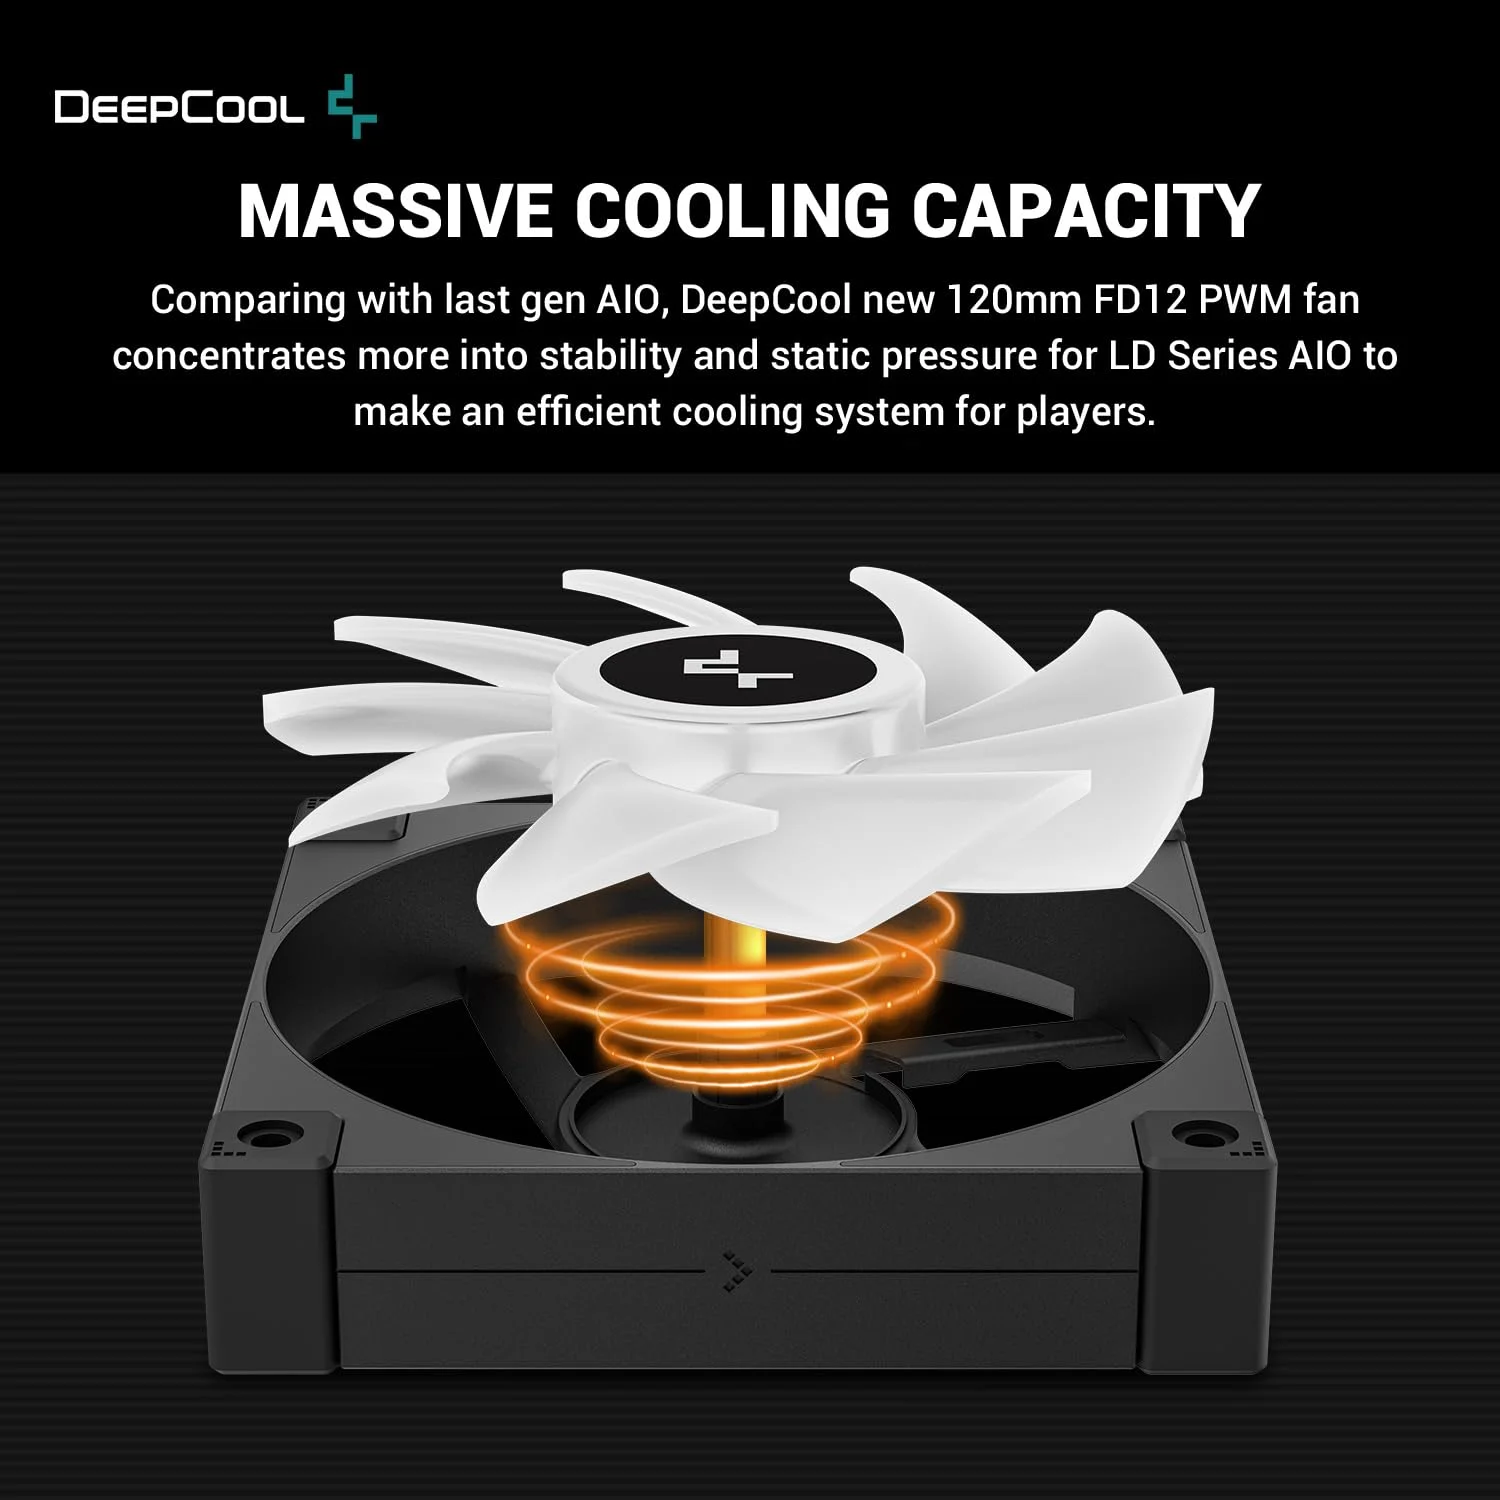 DeepCool-LD360-360mm-Liquid-Cooler